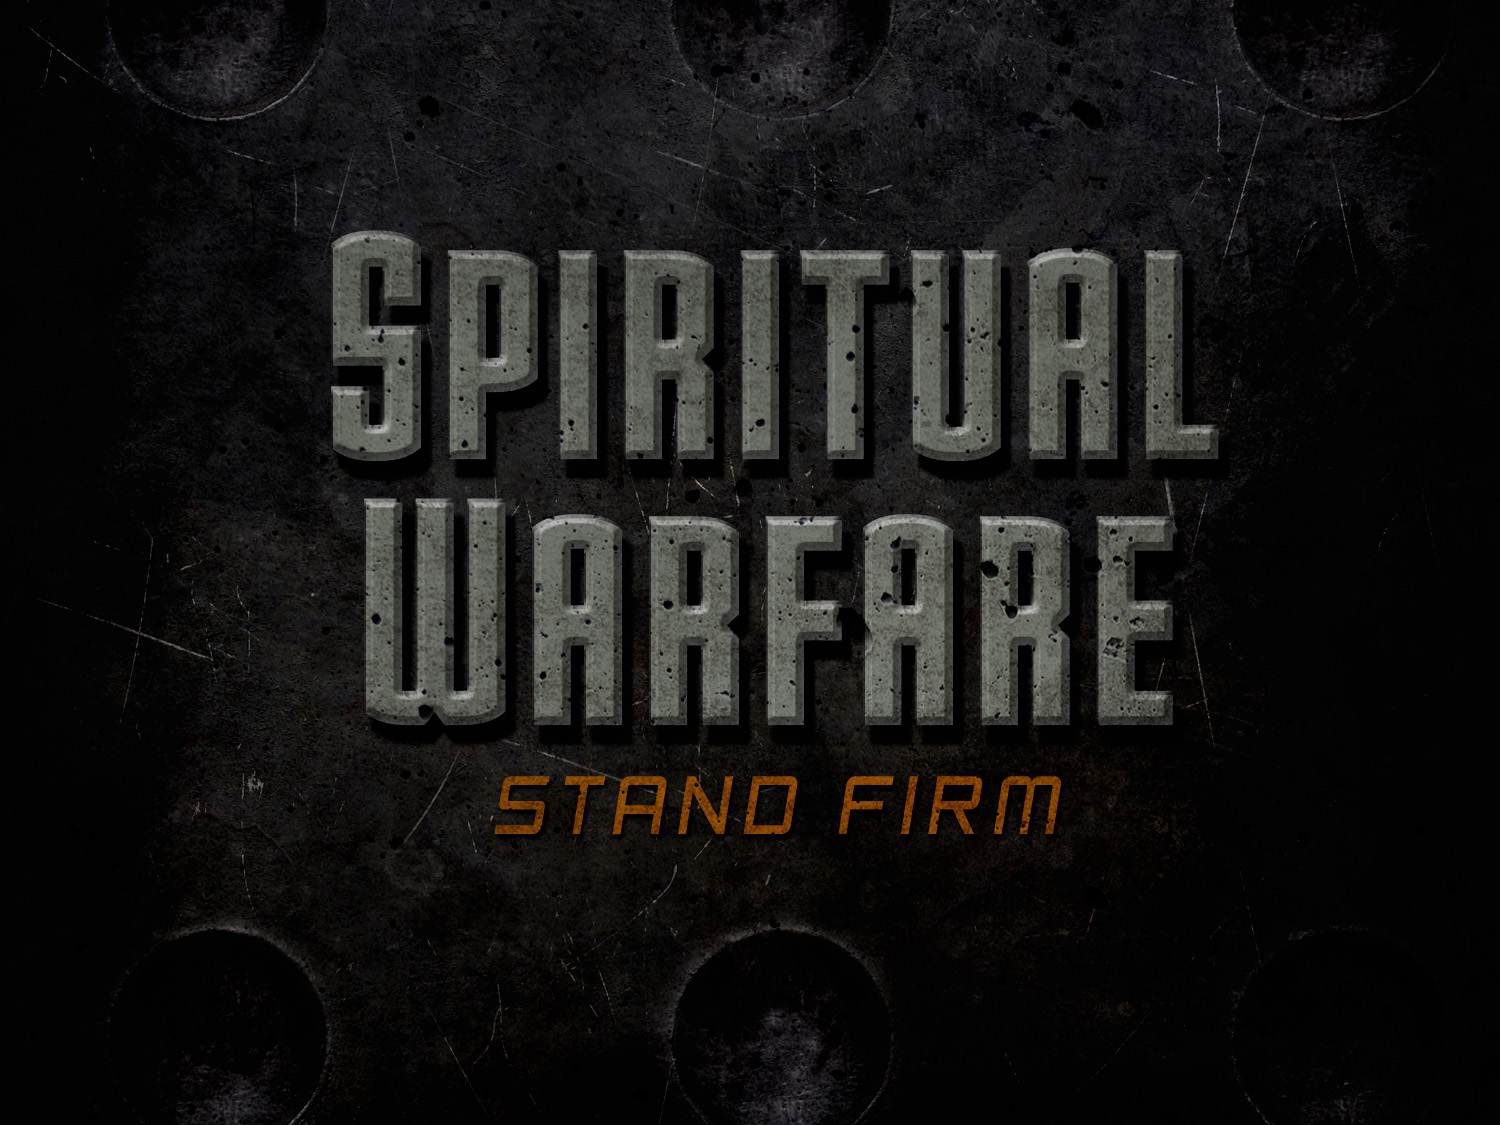 Spiritual Warfare - We Wrestle Against Wicked Spirits